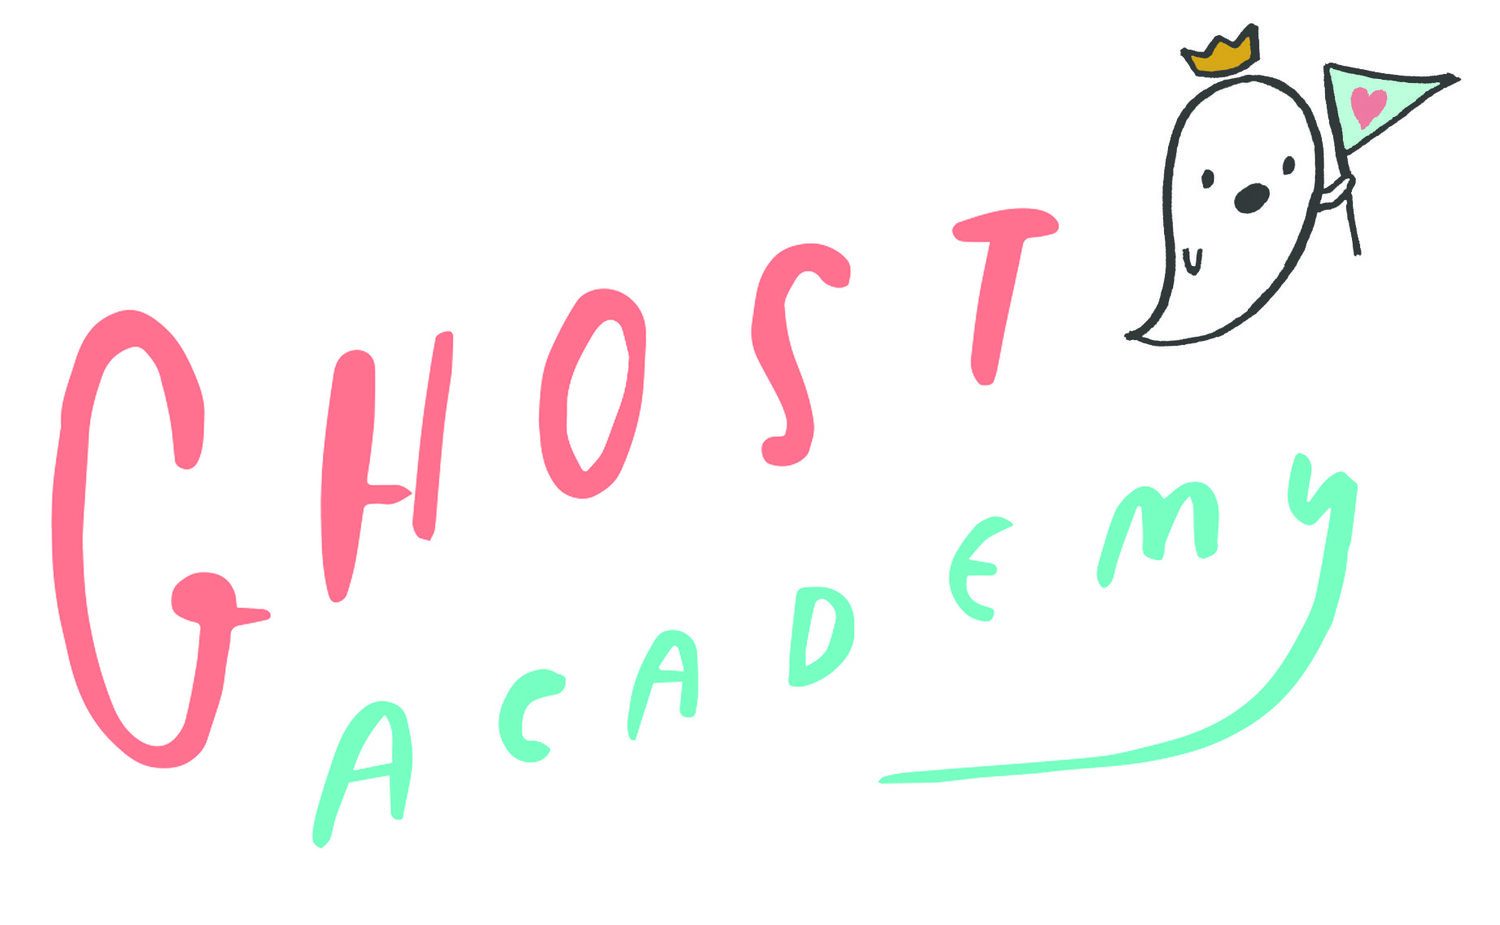 ghost academy